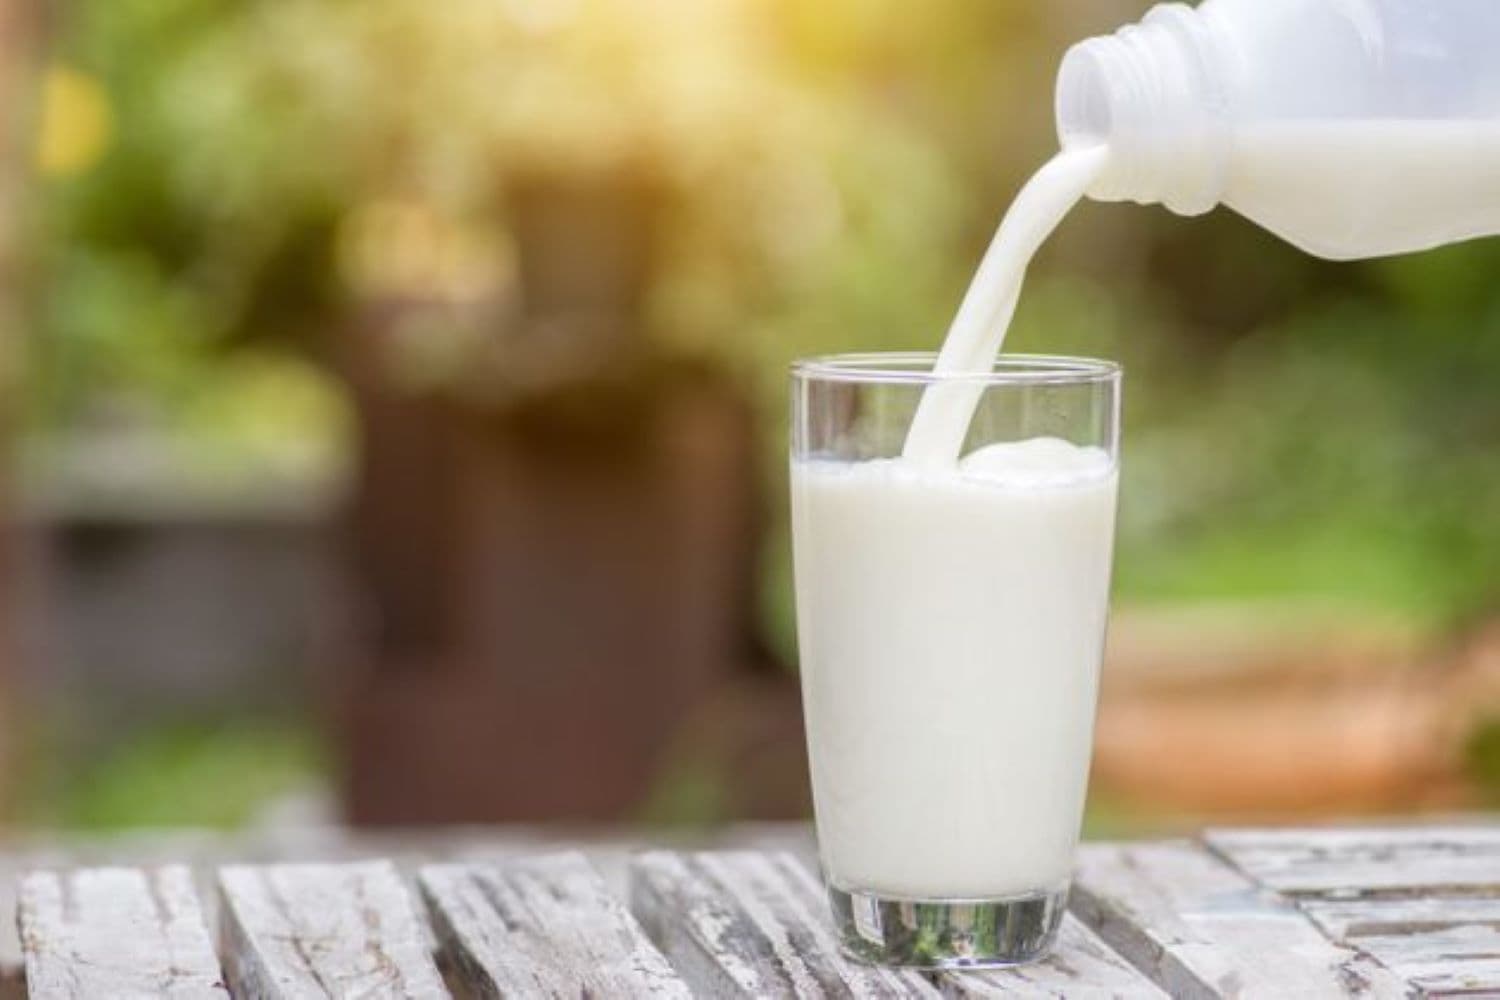 Scandalo del latte importato, Report indaga